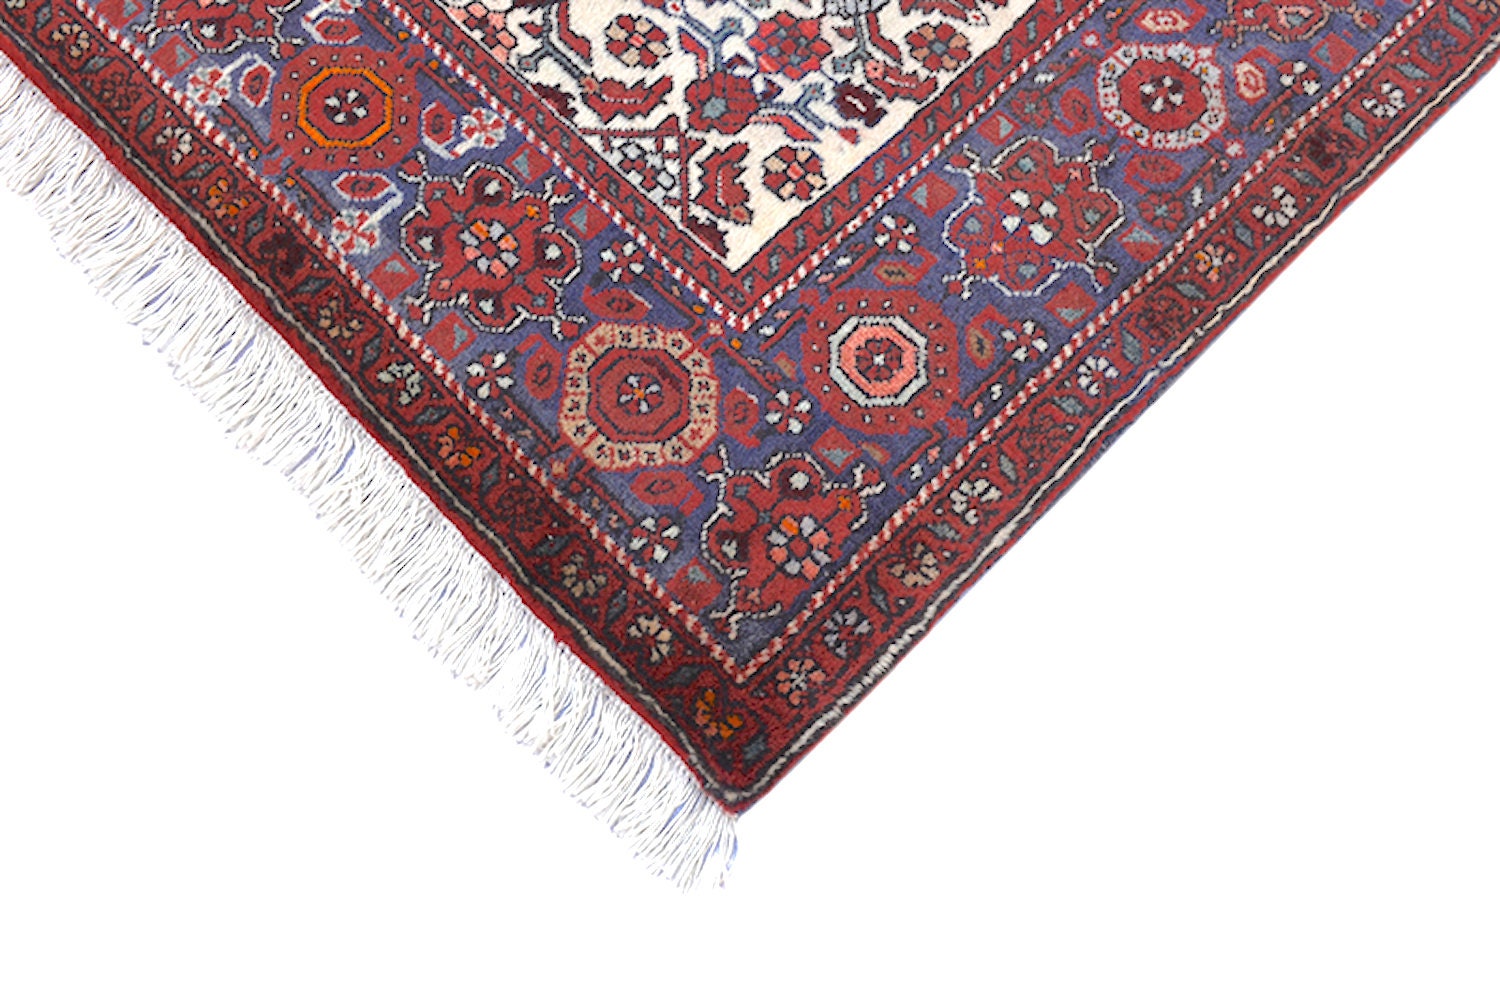 Antique Handmade 3x5 Rug | Tribal Medallion Rug | Persian Turkish Red Blue Rug | Wool Tribal Geometric Rug